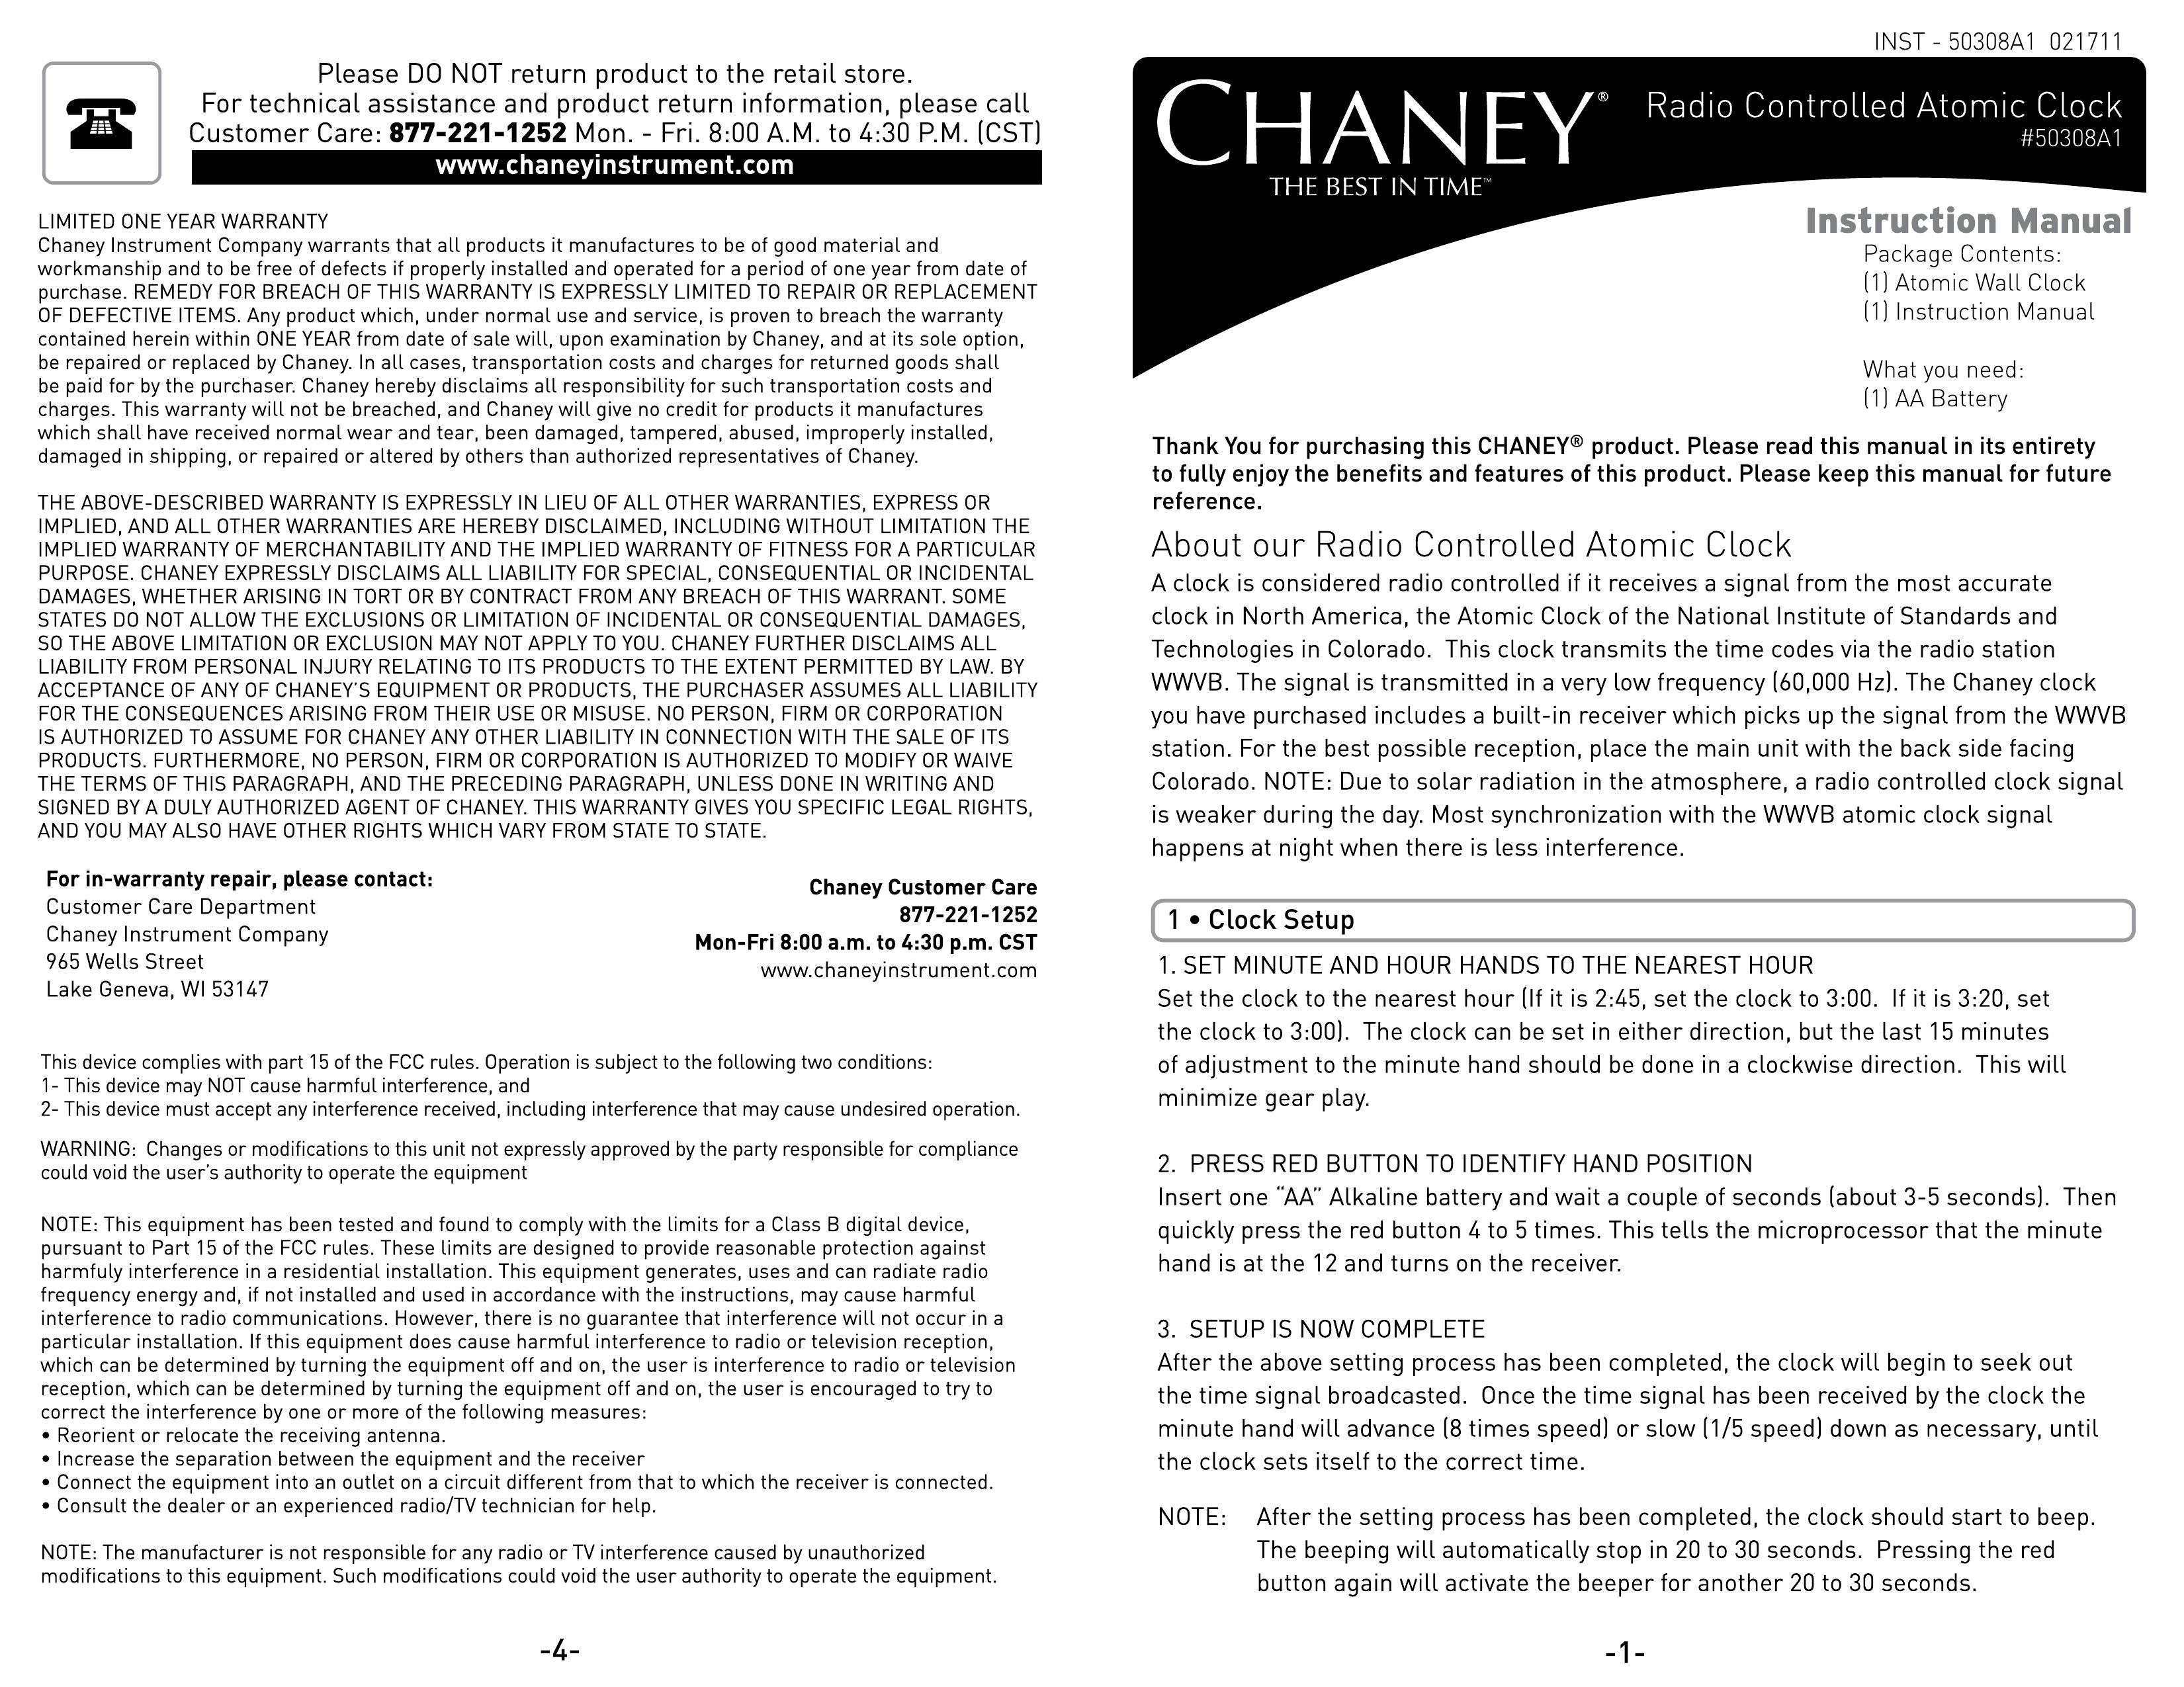 Chaney Instrument #50308A1 Clock Radio User Manual